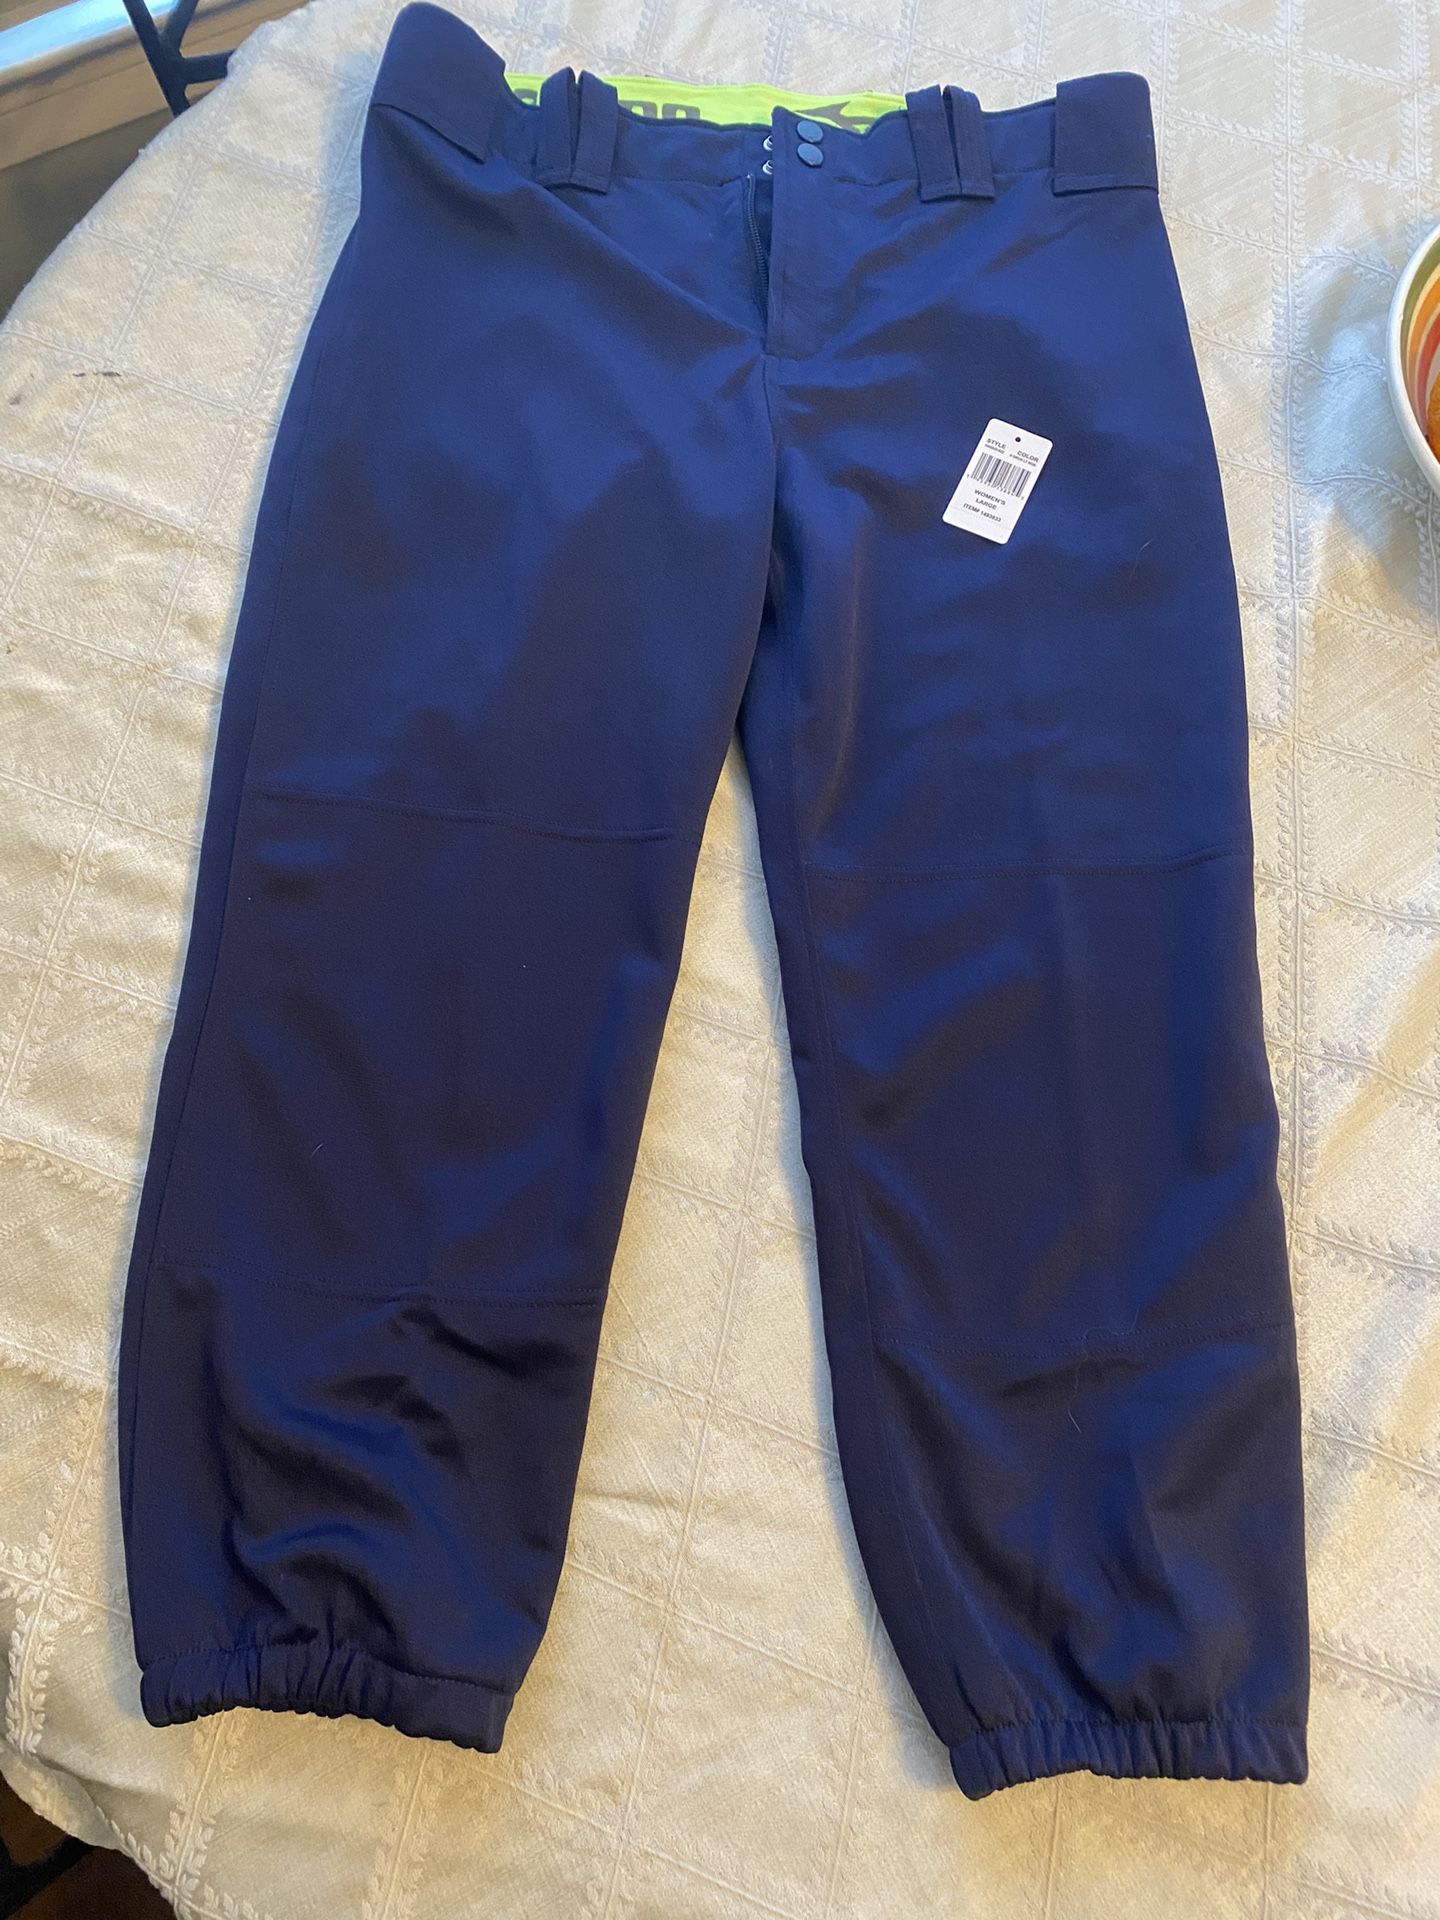 Navy Blue Softball Pants 